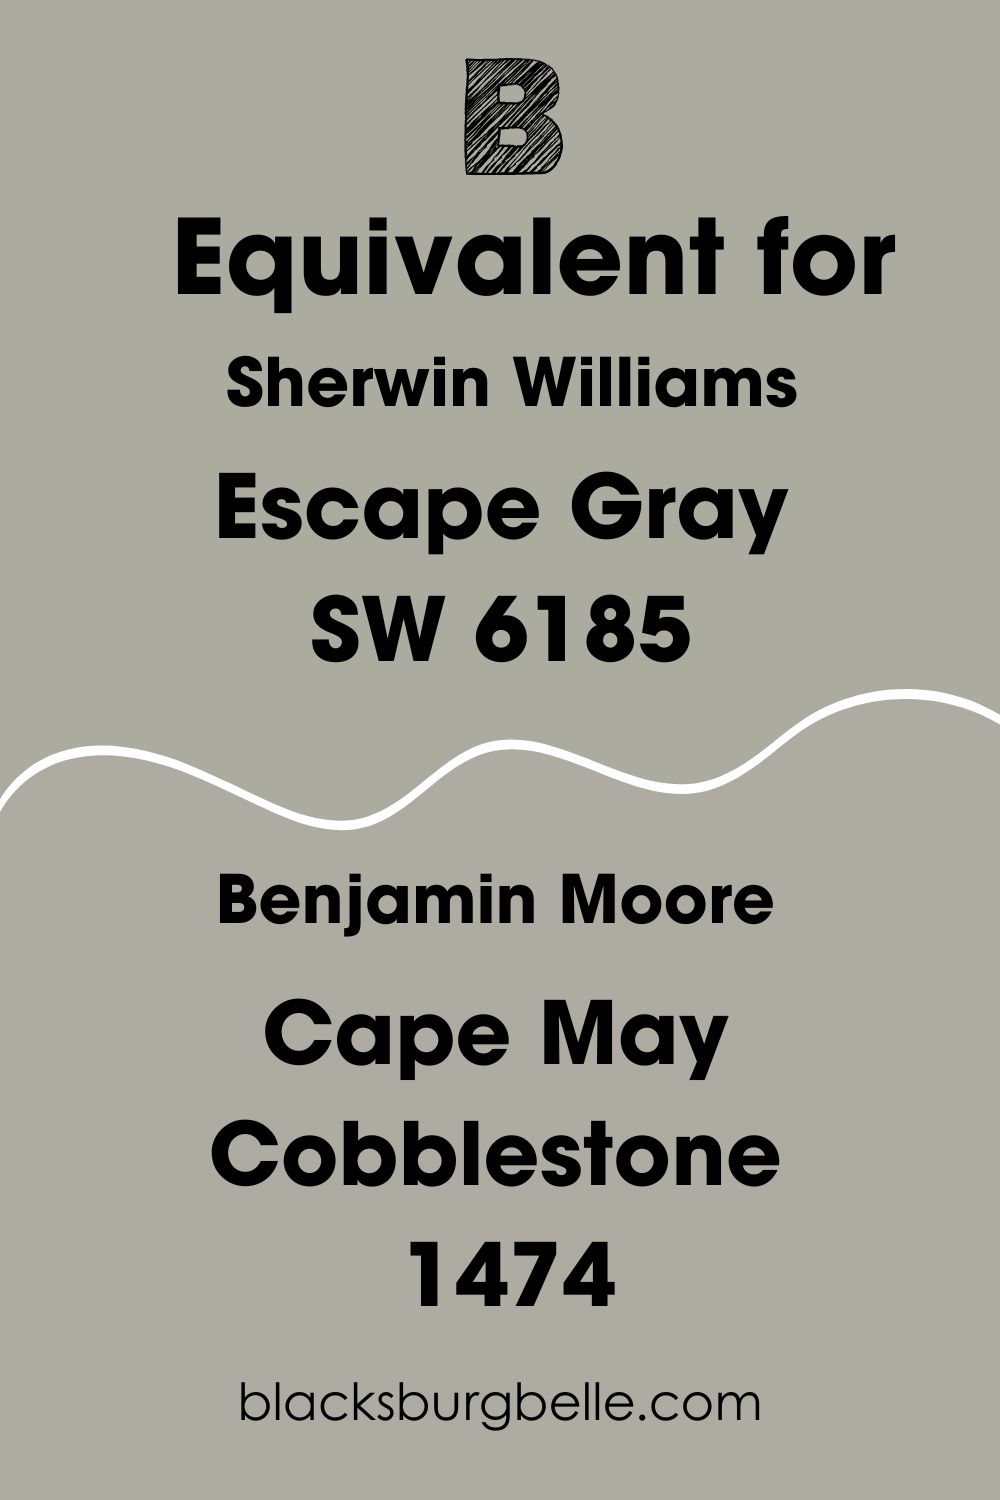 Benjamin Moore’s Cape May Cobblestone 1474